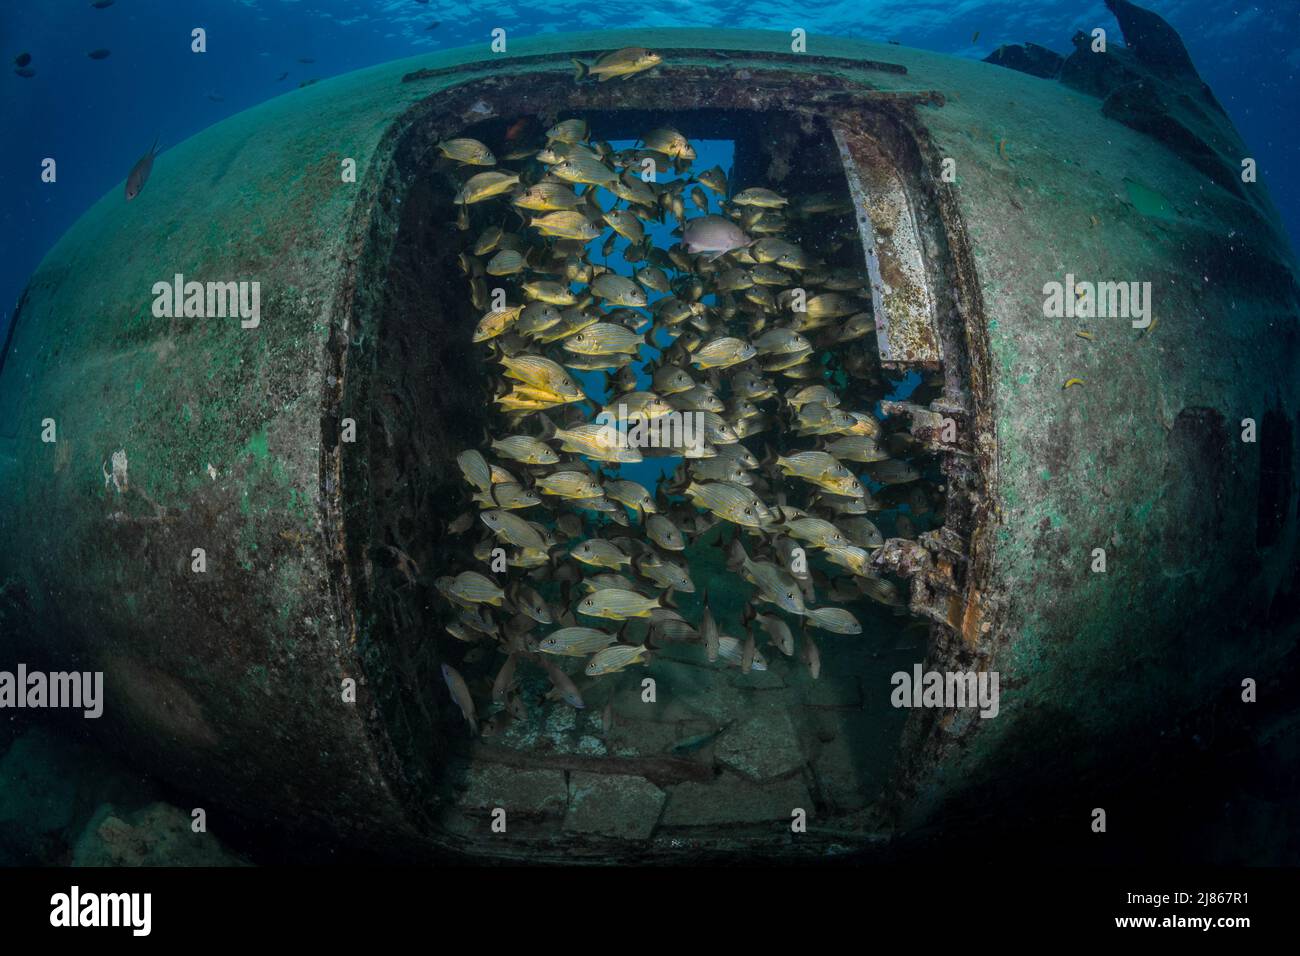 Blue-Stripped Grunts (Haemulon sciurus) inhabit the wreckage of an old aircraft on the reefs off the Caribbean island of Sint Maarten Stock Photo